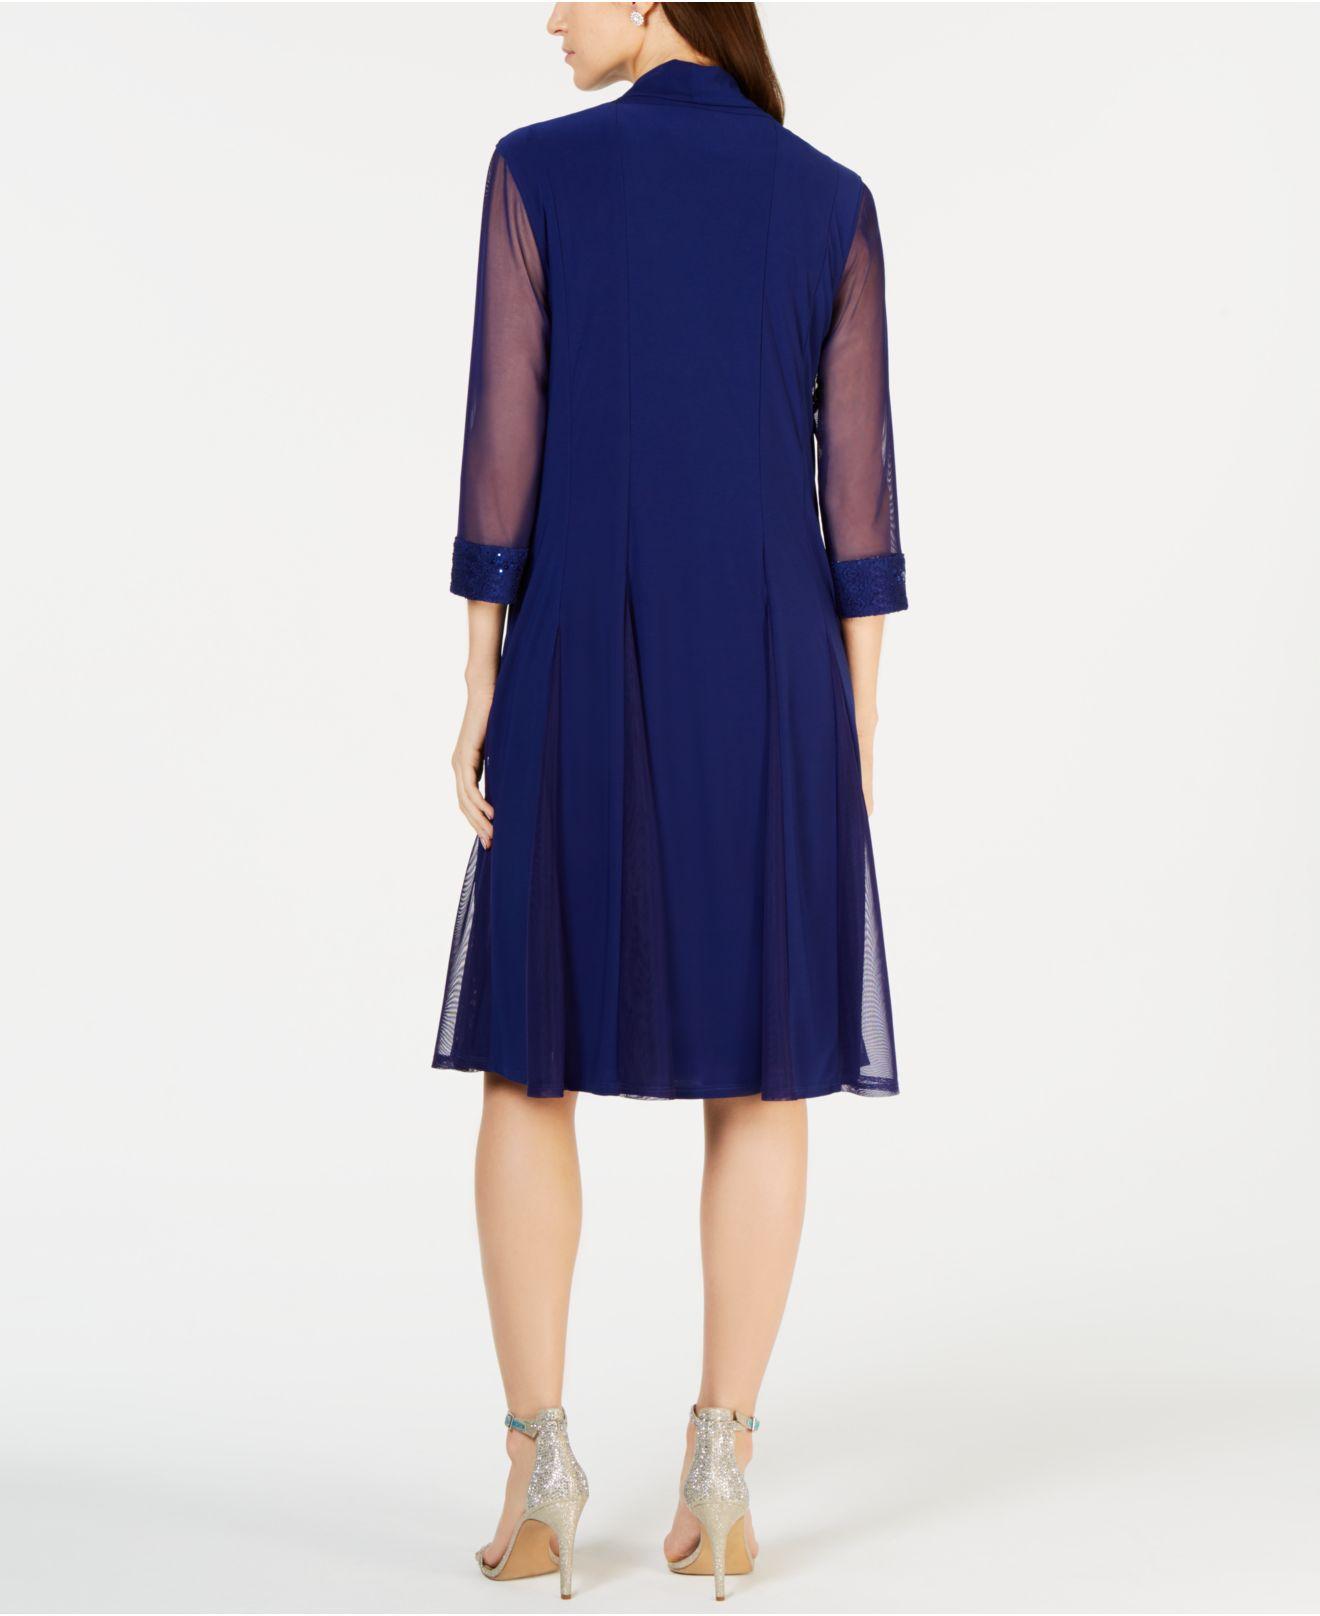 R & M Richards Lace Embellished Dress & Duster Jacket in Blue - Lyst